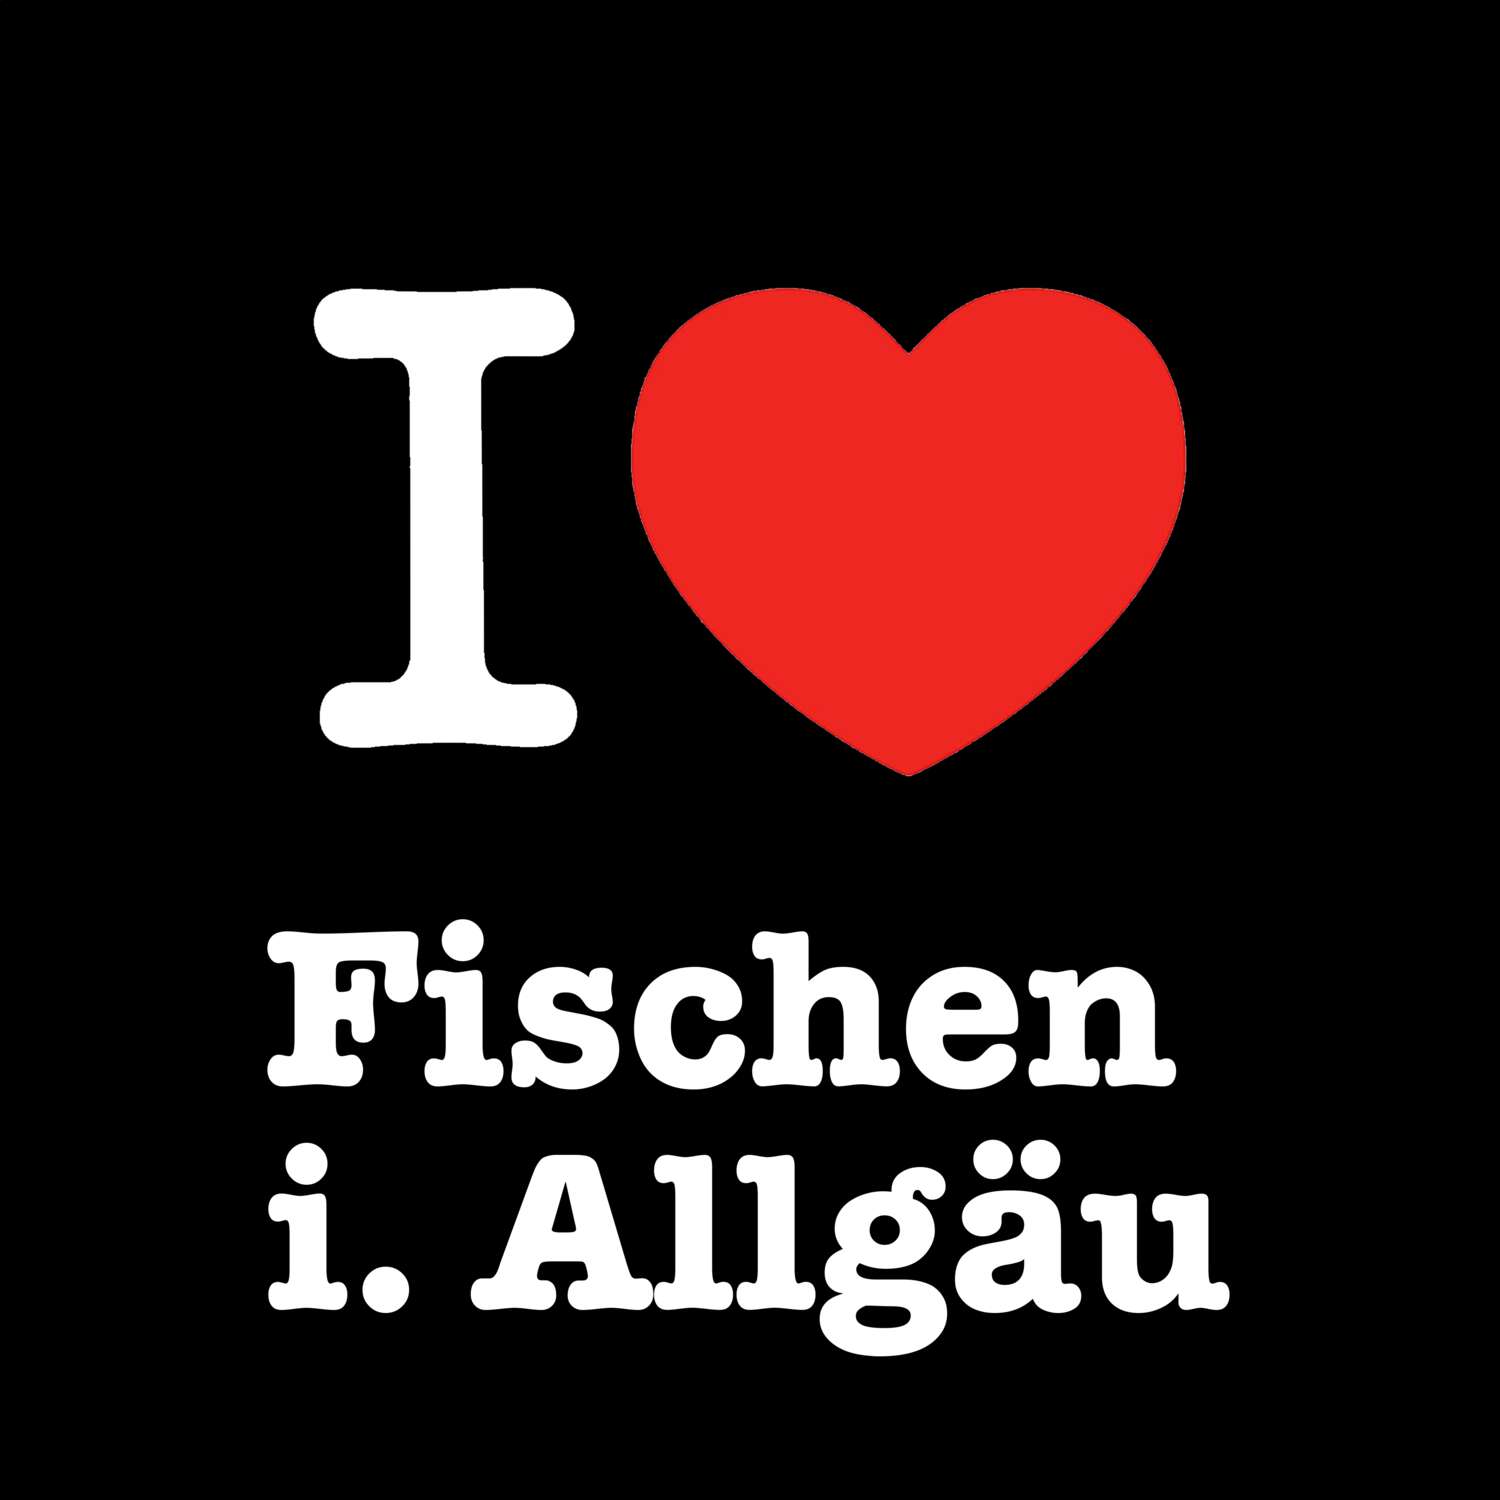 Fischen i. Allgäu T-Shirt »I love«